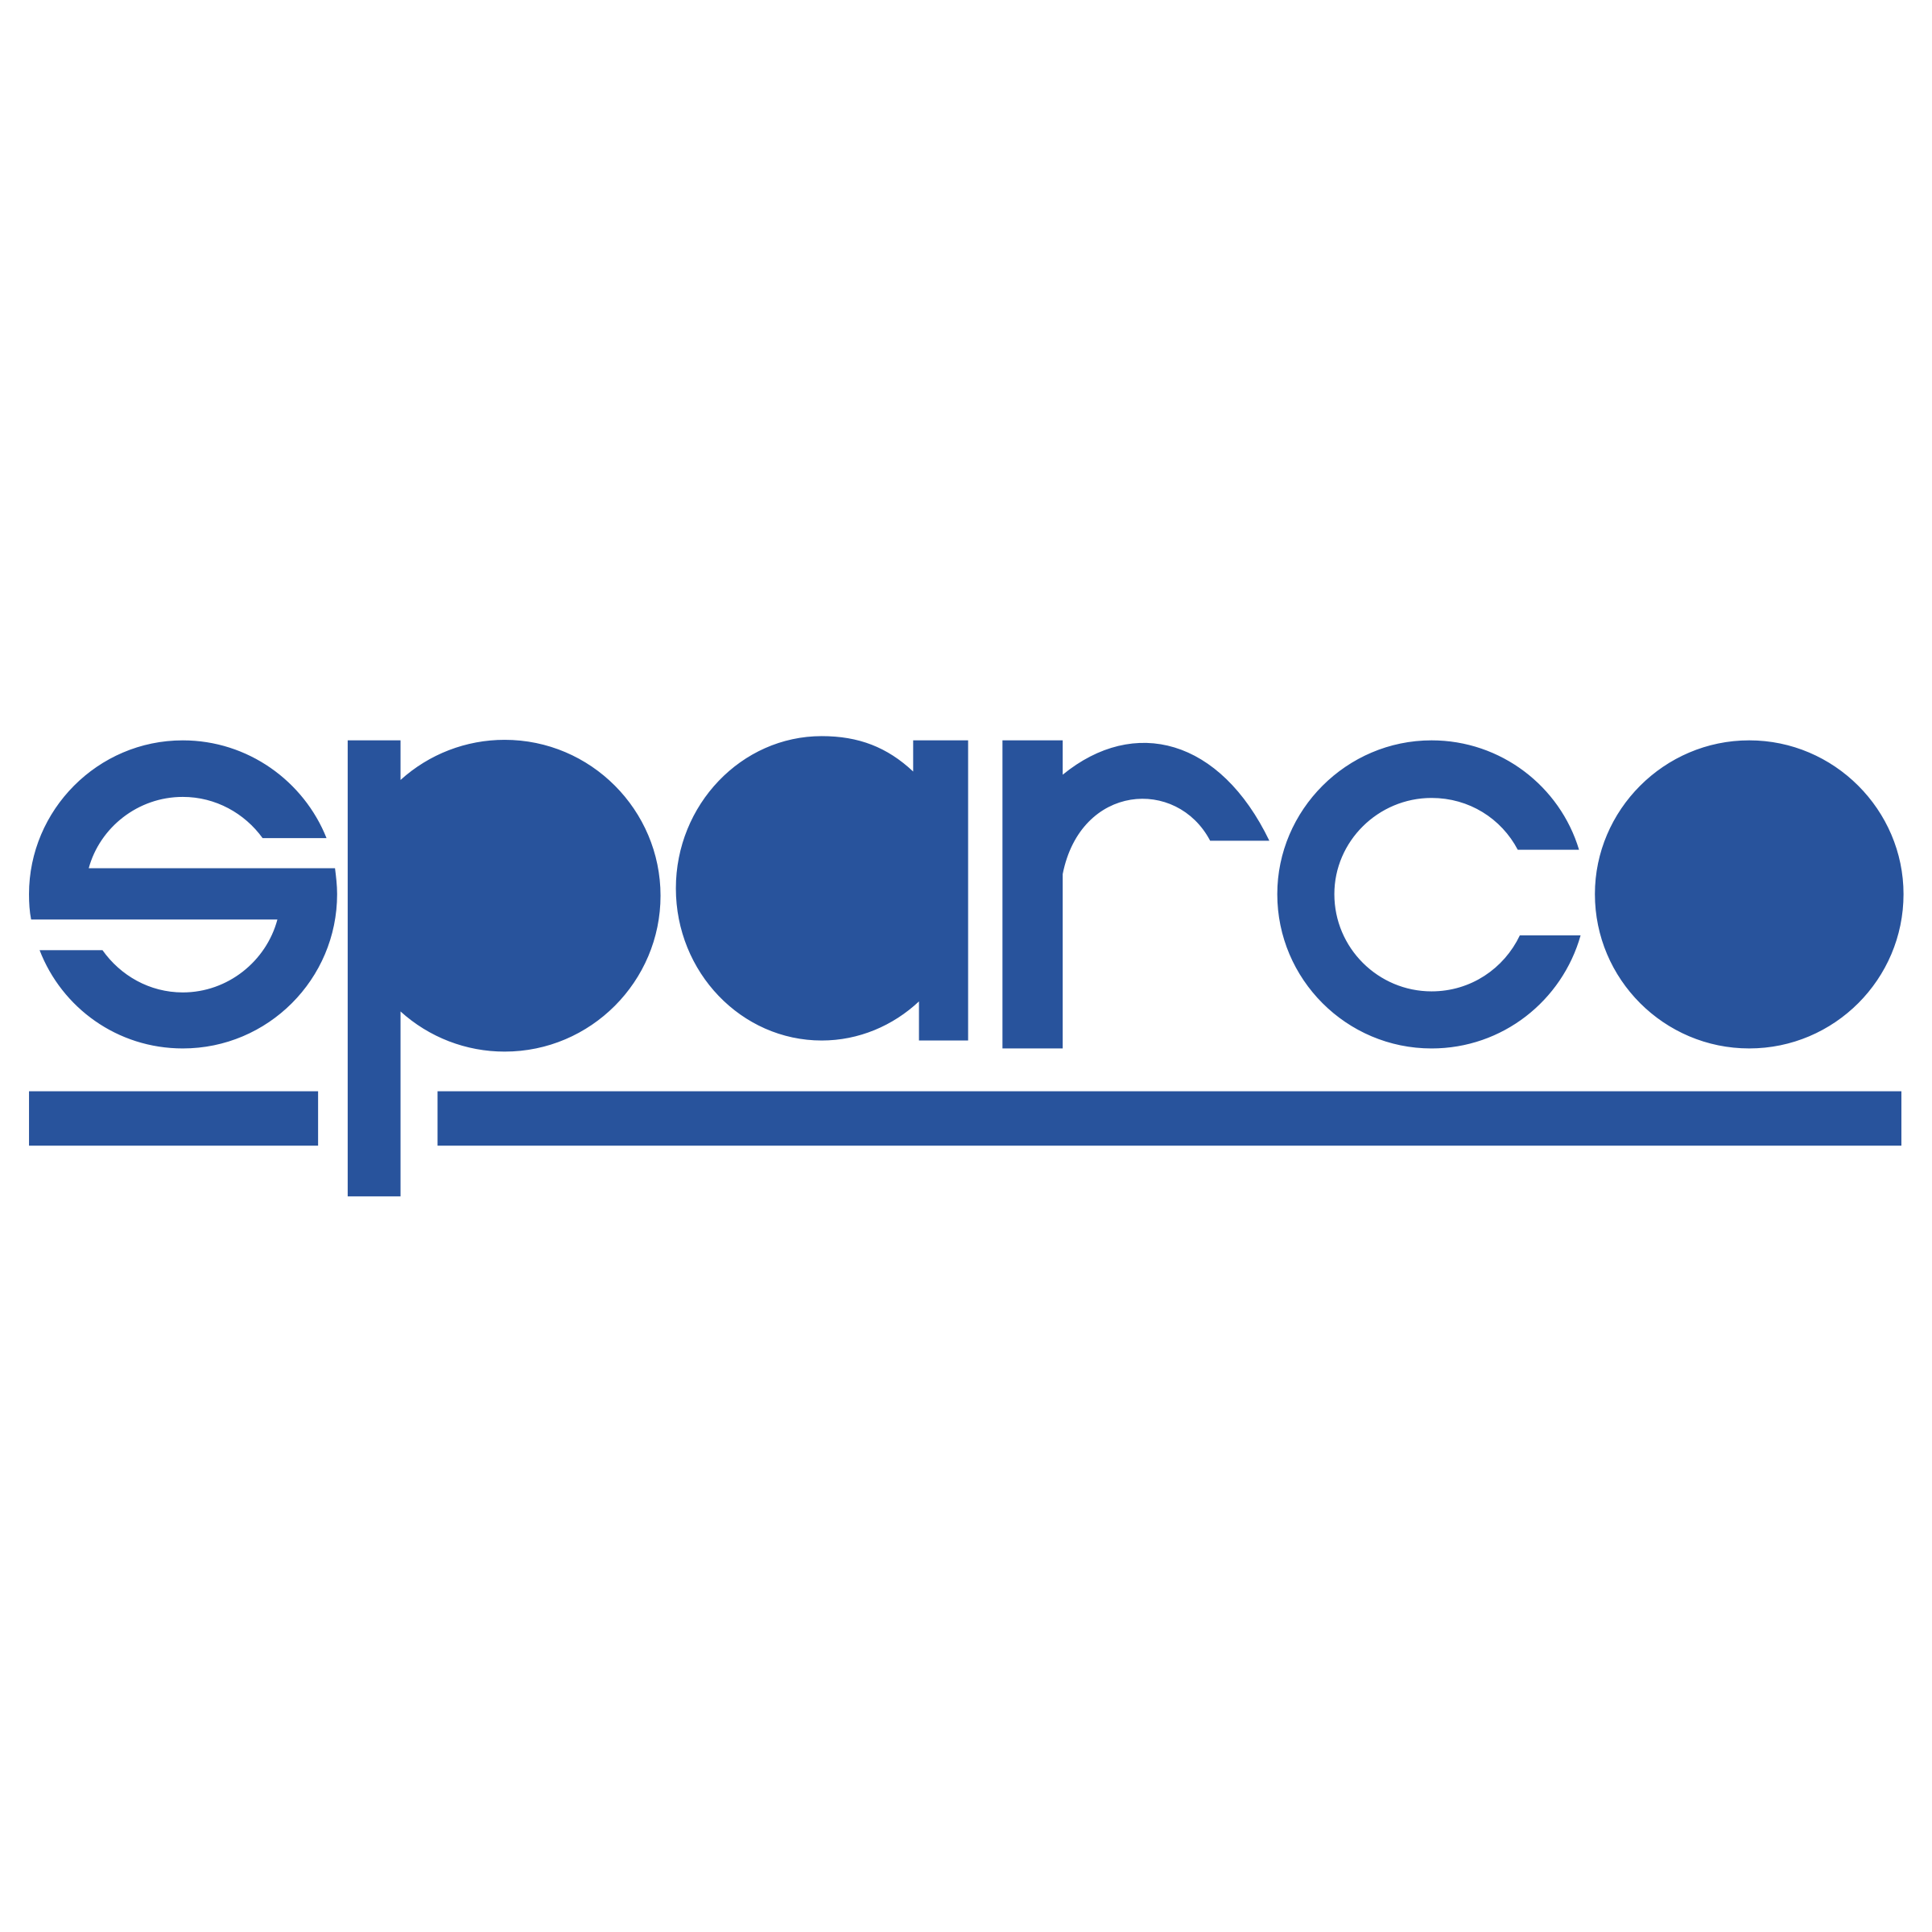 Sparco Logo - Sparco Logo PNG Transparent & SVG Vector